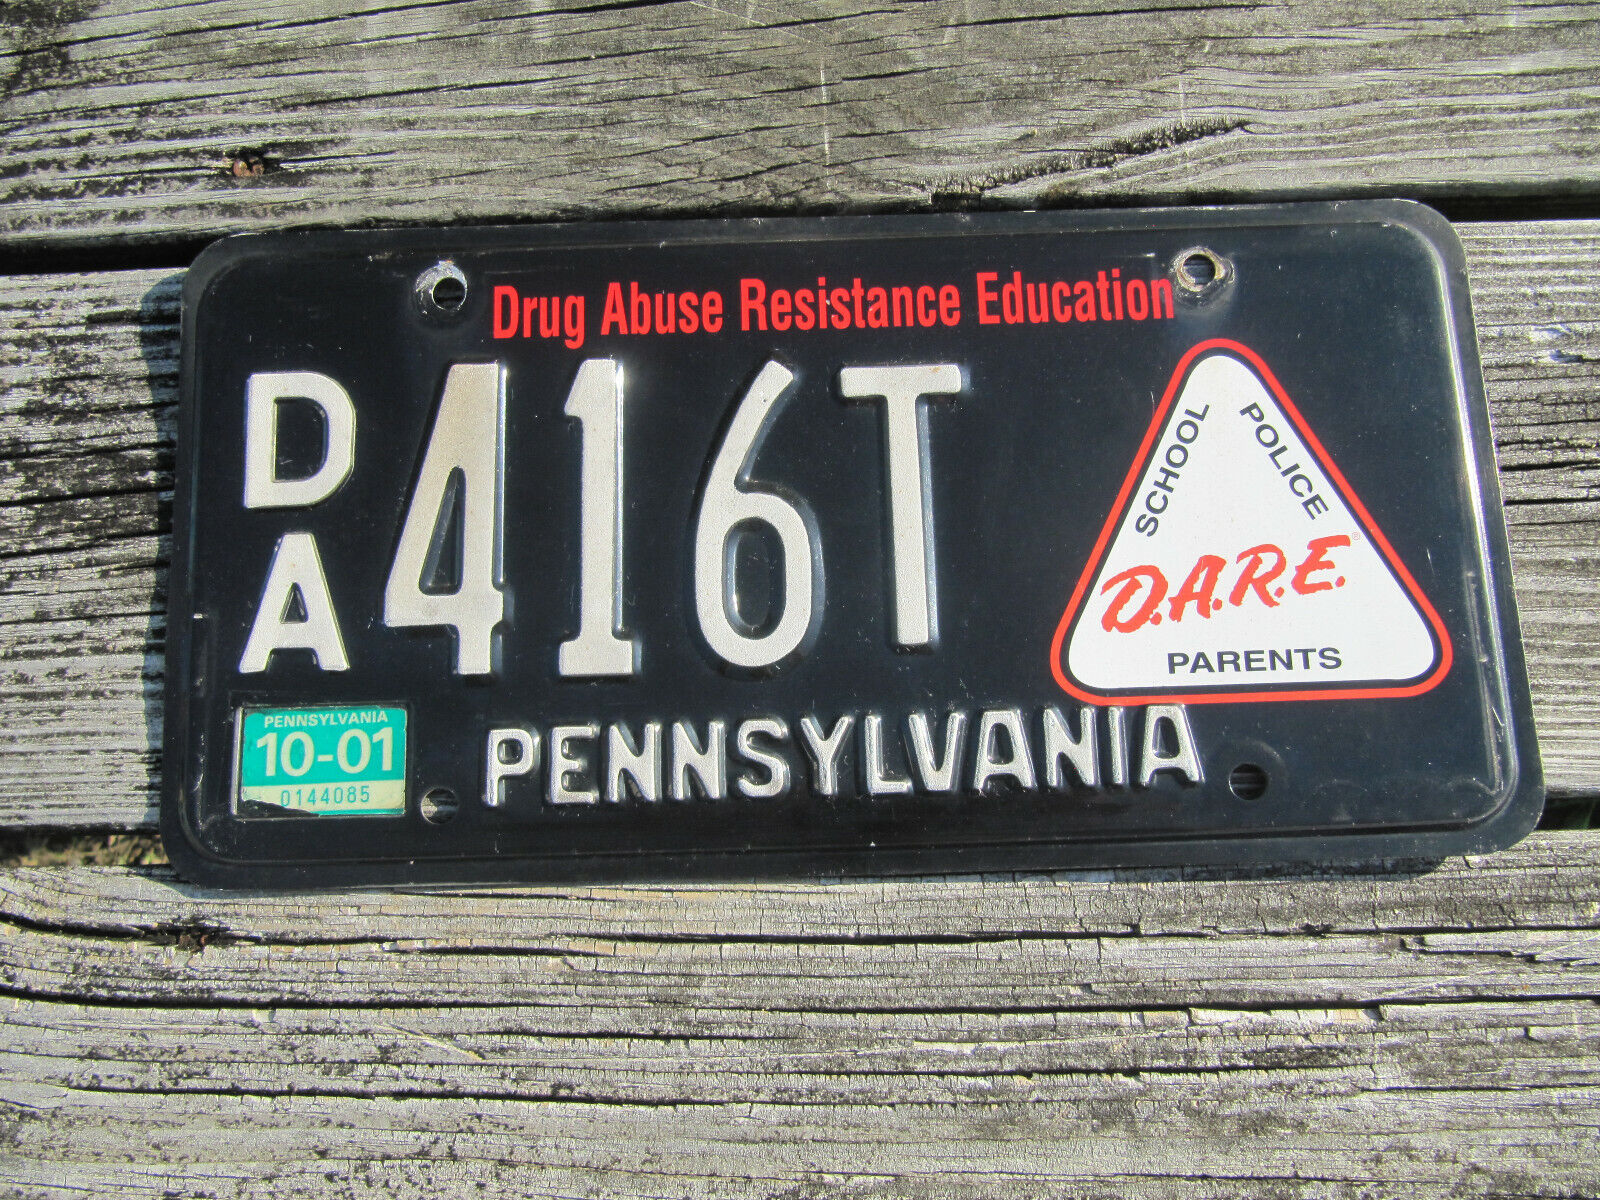 Pennsylvania DARE License Plate Drug Abuse Resistance Education PA Penna DA 416T